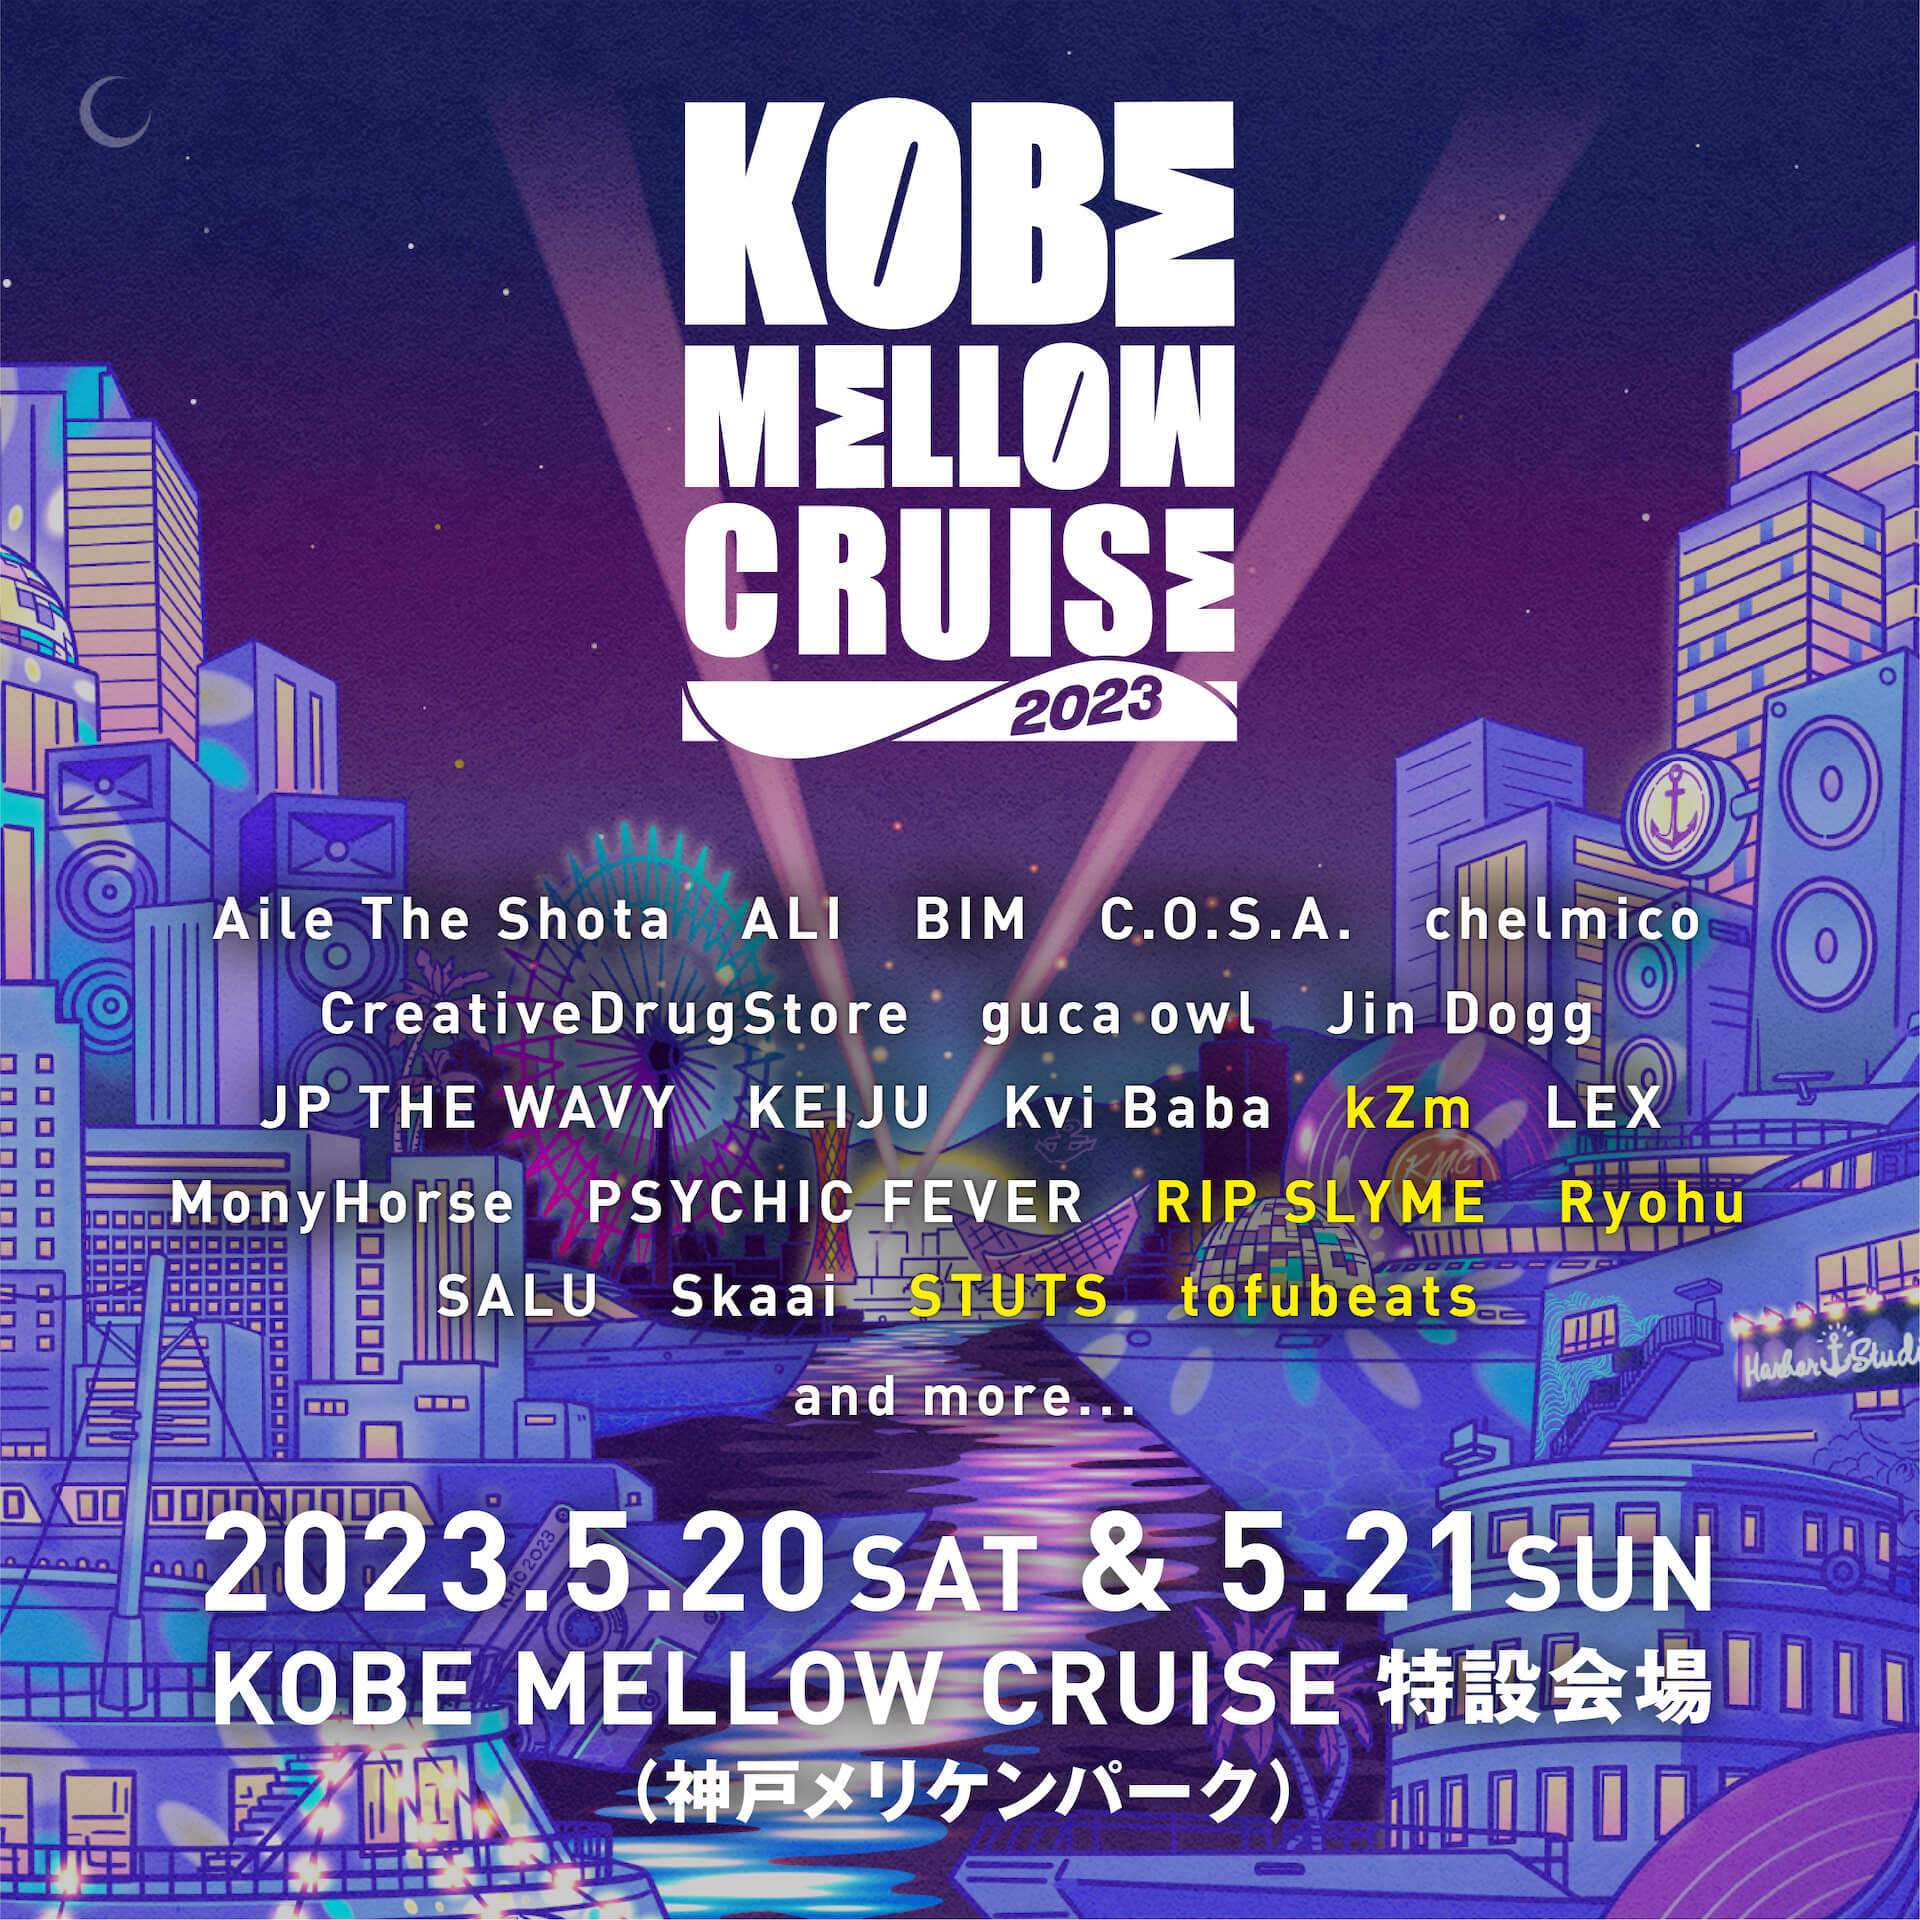 RIP SLYME、STUTS、kZm、tofubeats、Ryohuらが追加でラインナップ｜＜KOBE MELLOW CRUISE 2023＞第2弾アーティスト発表 music230222_kobe-mellow-cruise-01